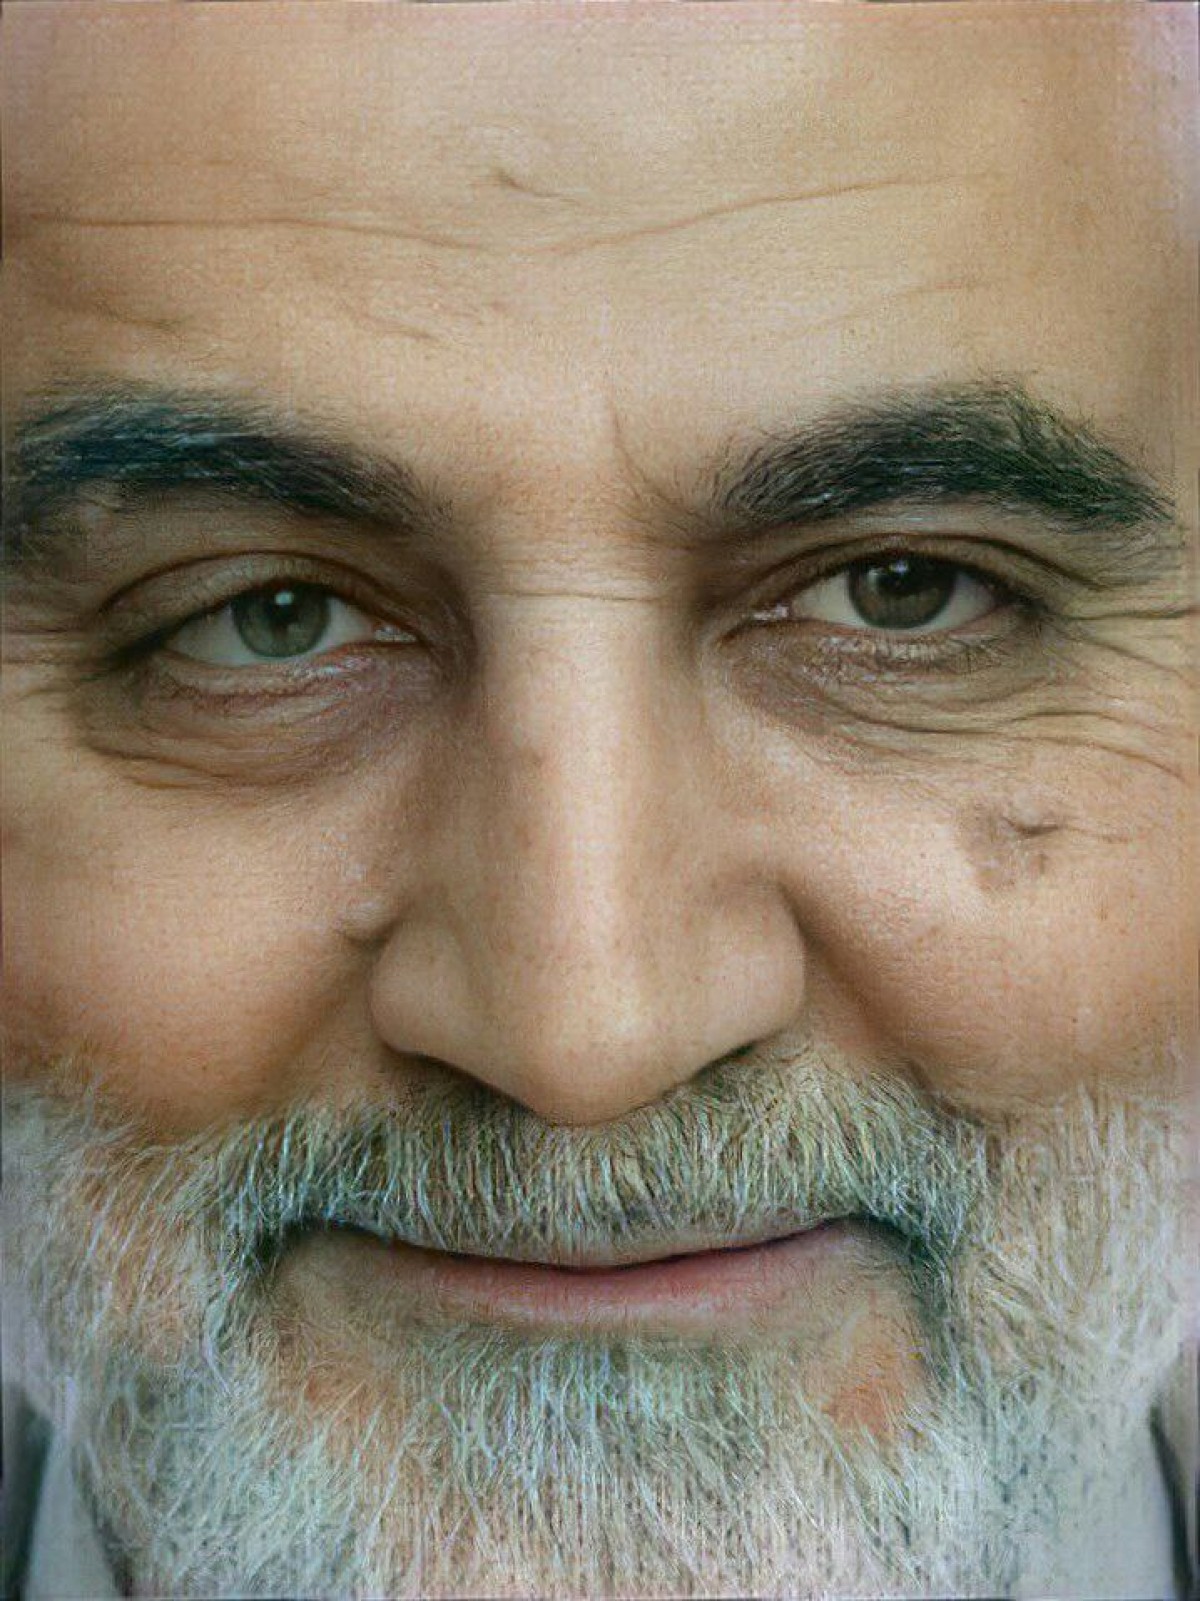  Commander Shahid Soleimani